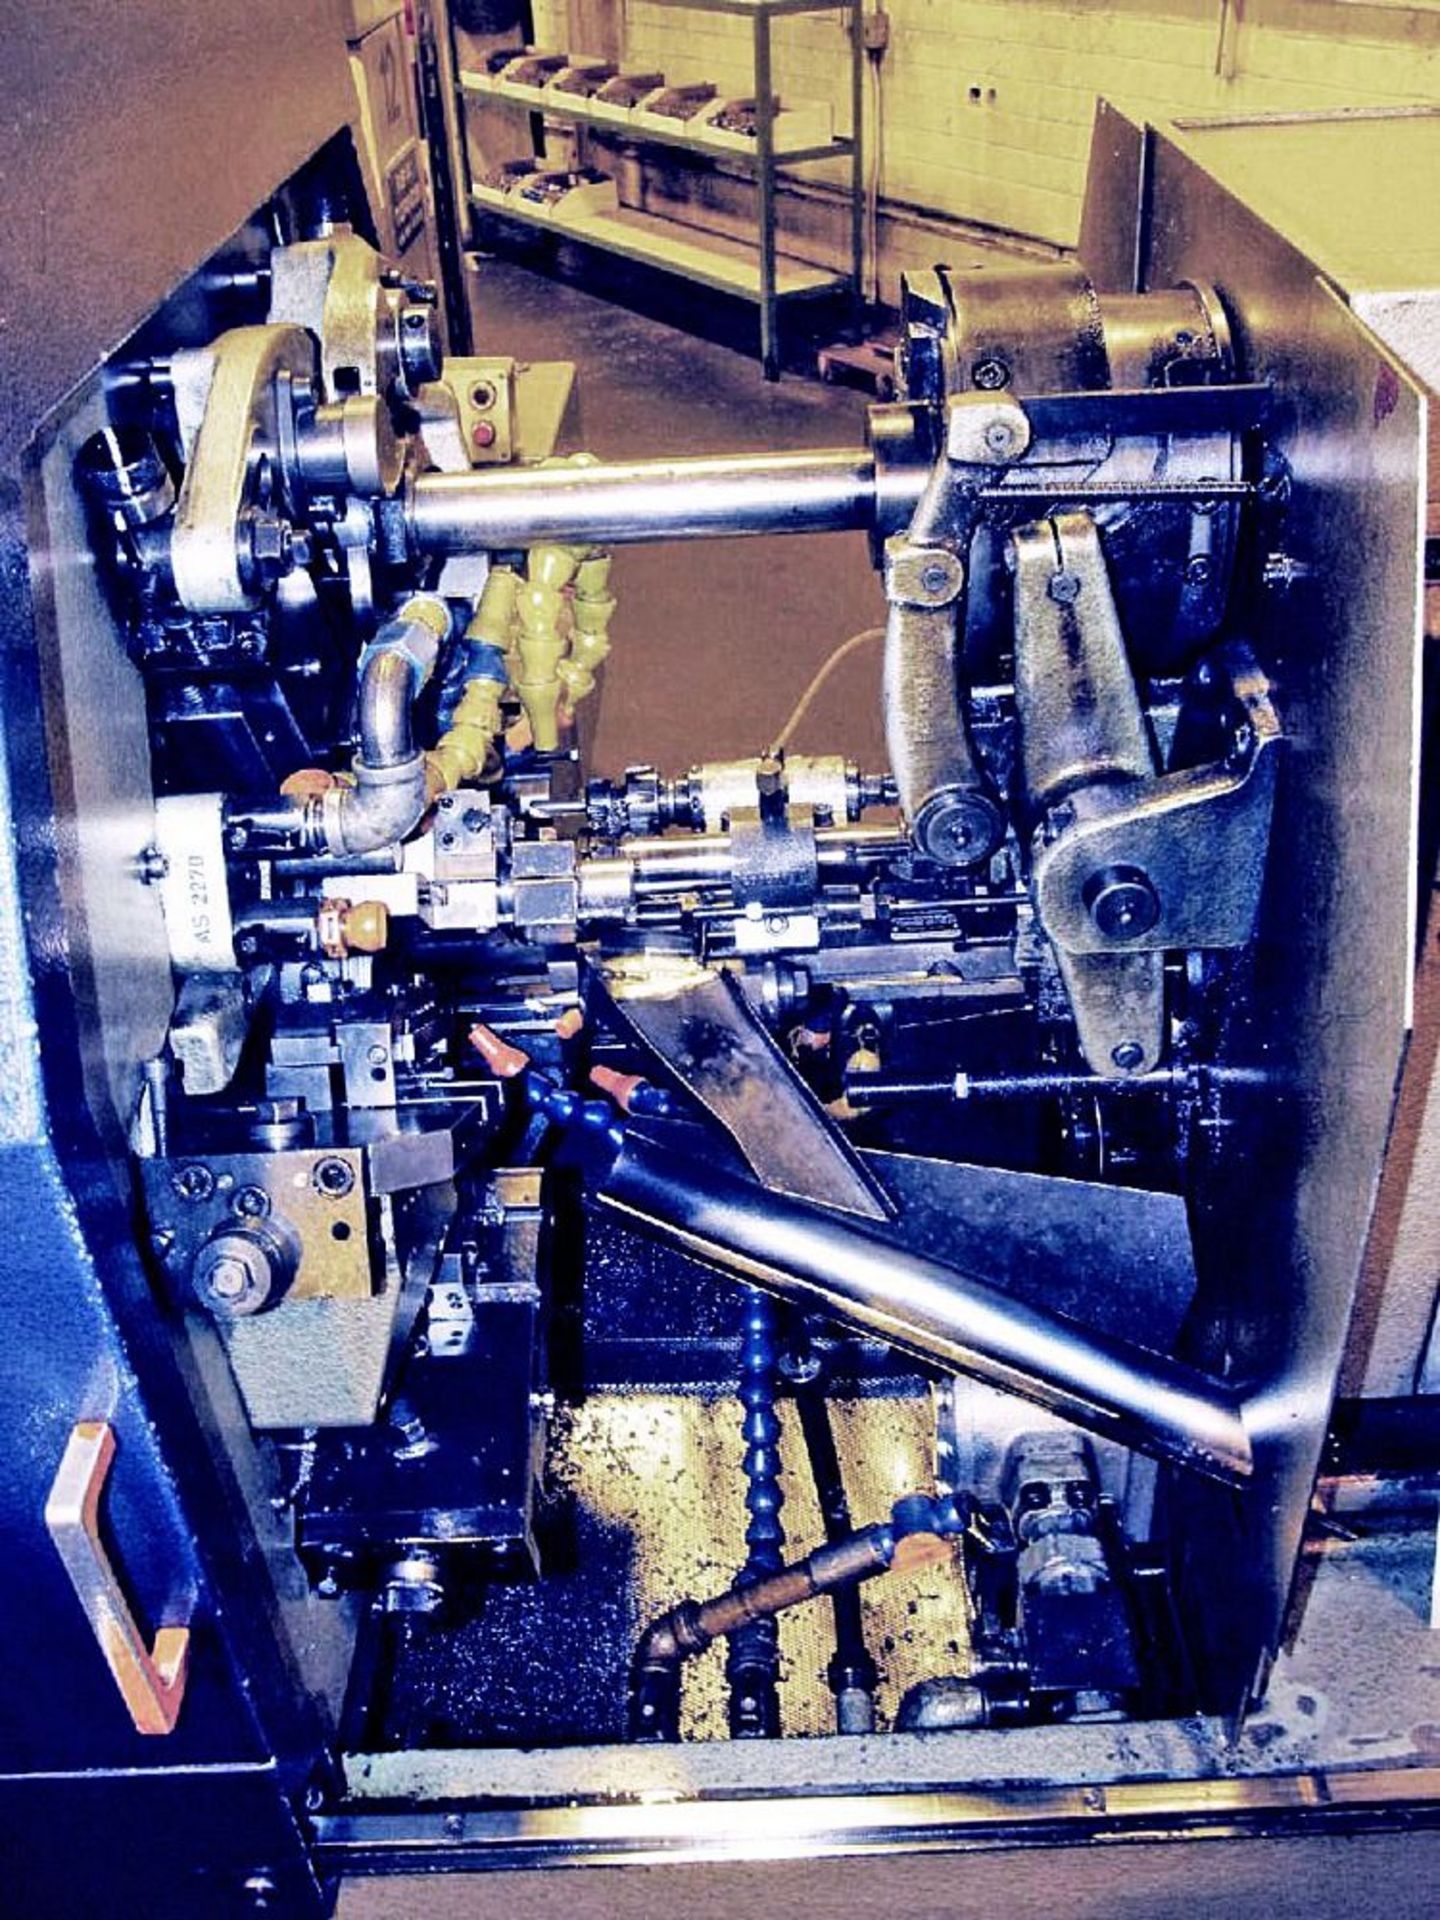 Tornos Model SAS16DC 6-Spindle Automatic Screw Machine - Image 4 of 6